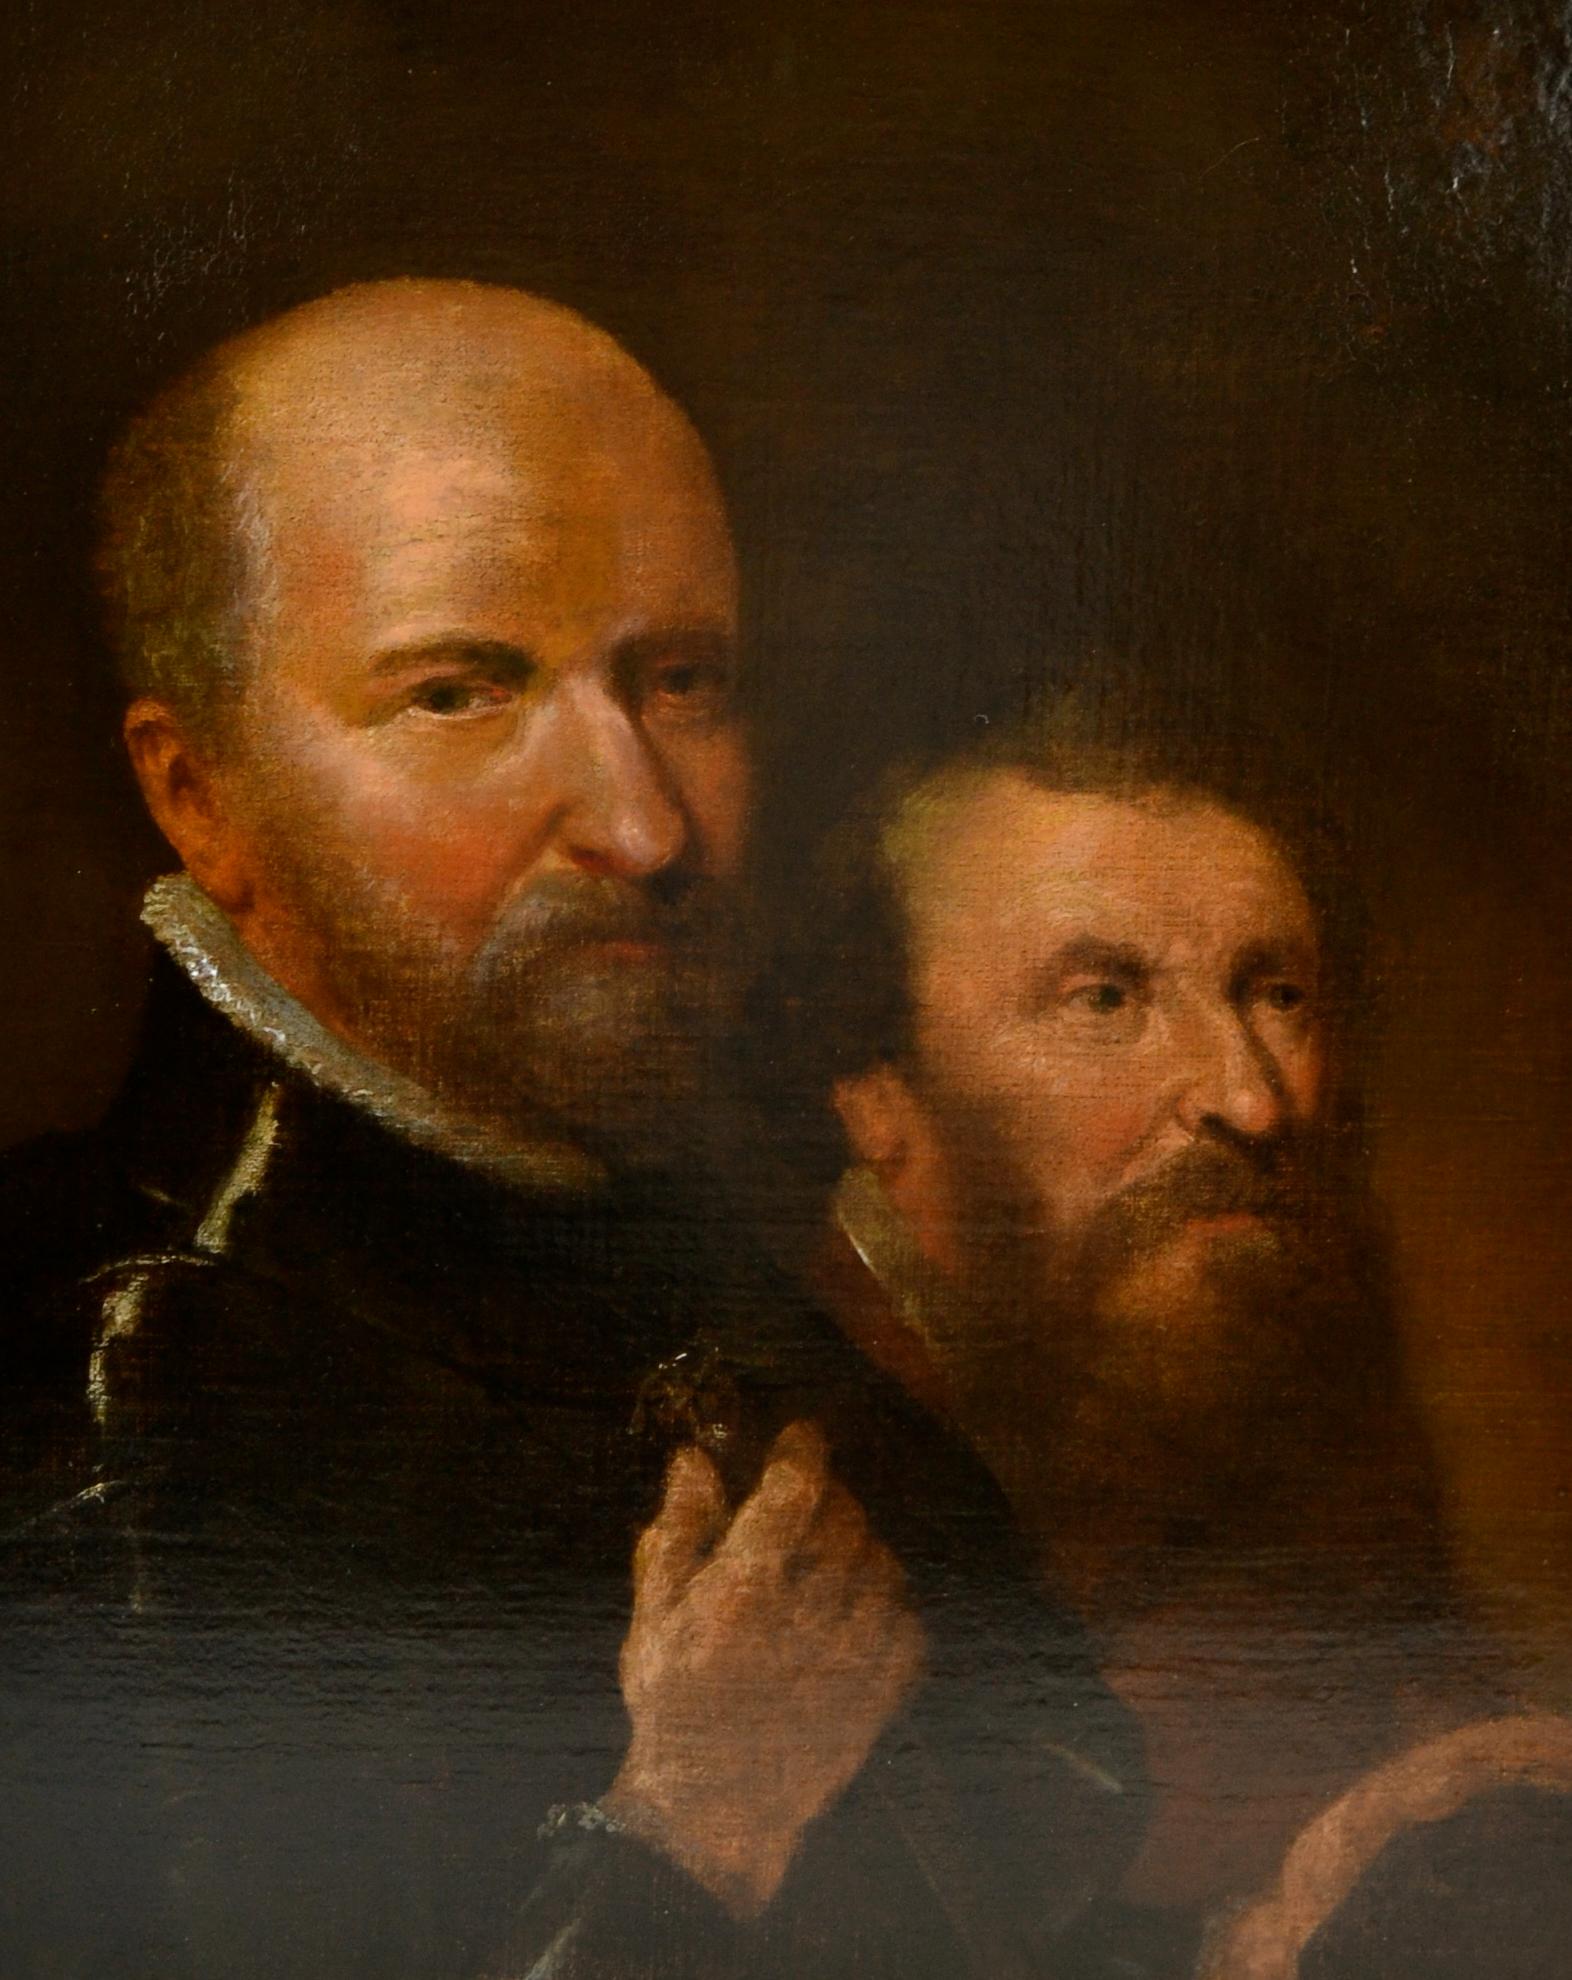 17th century beard